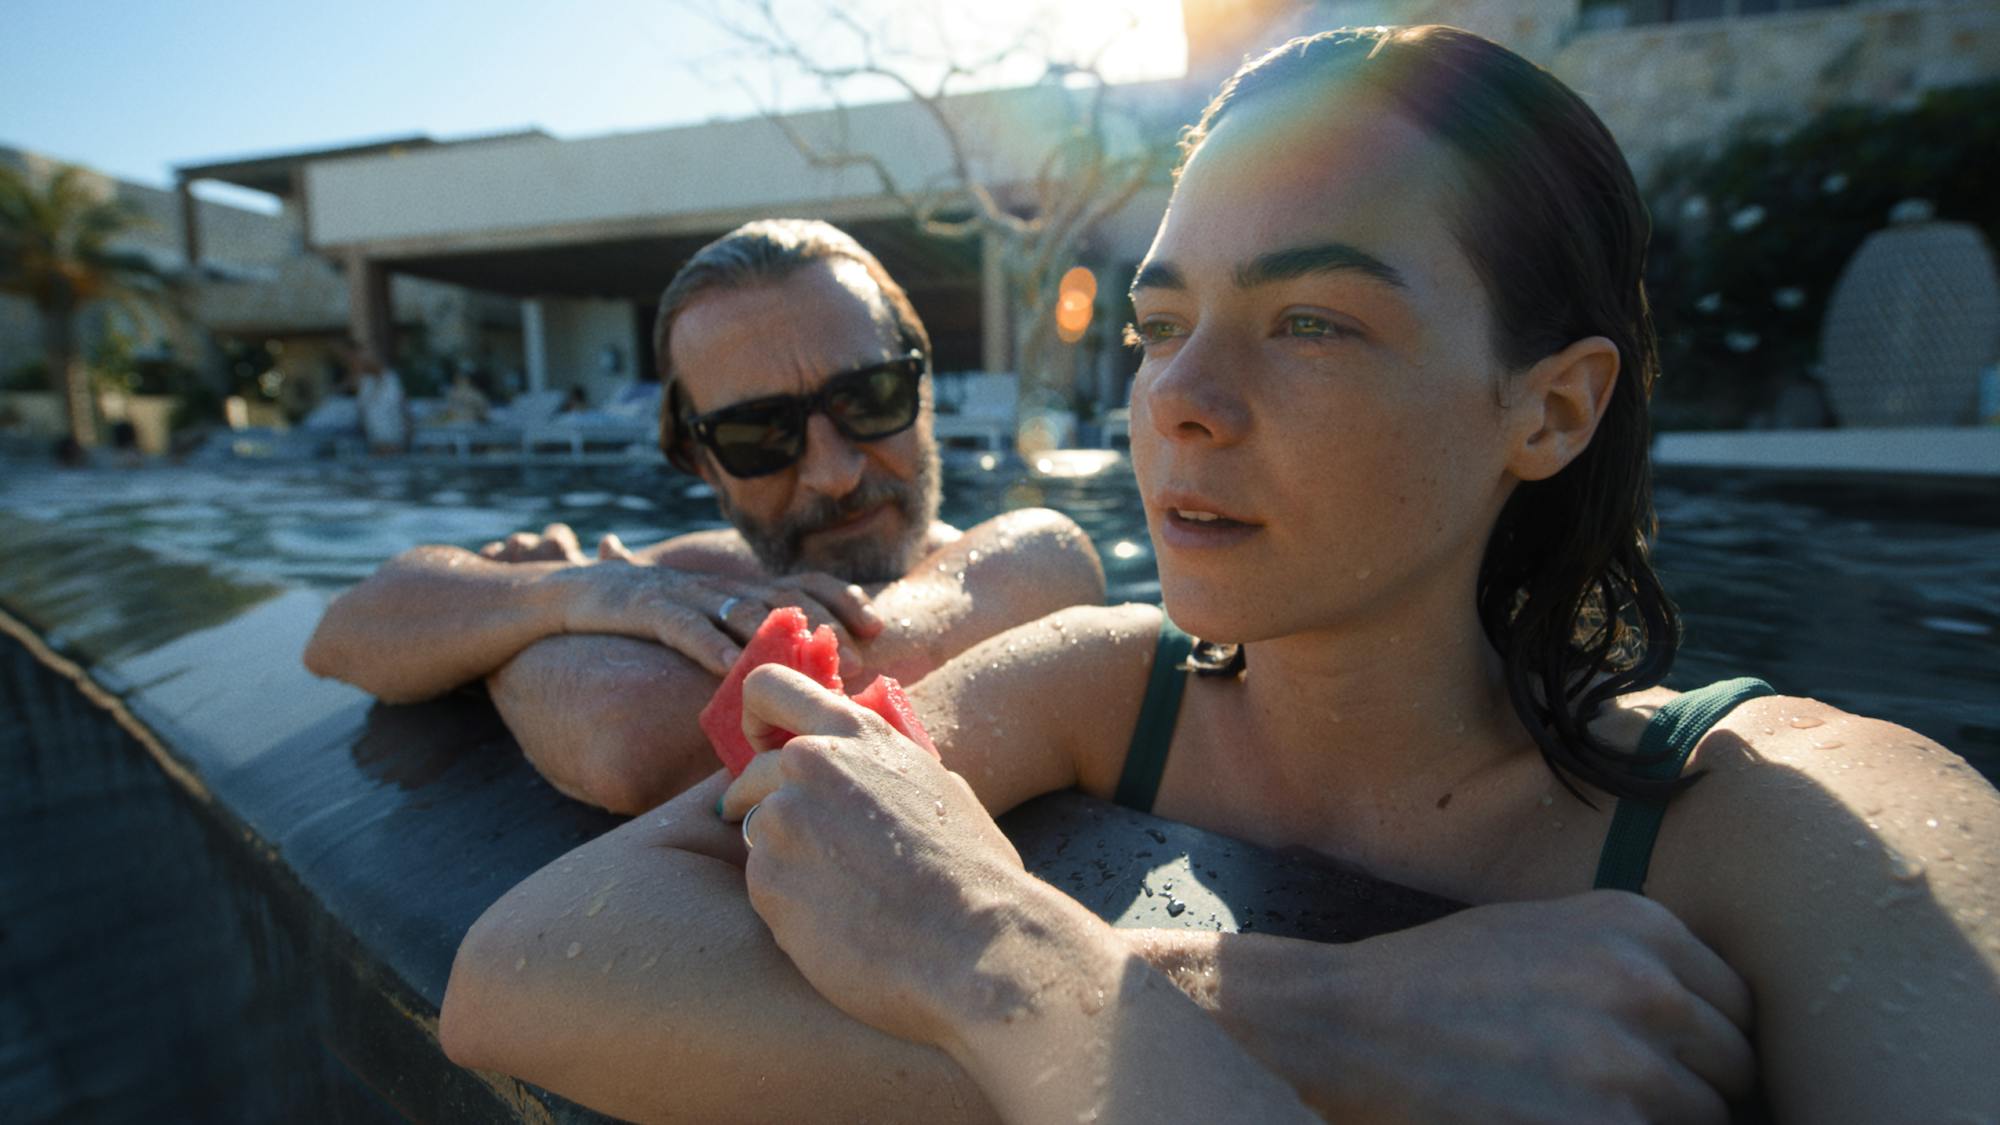  Daniel Giménez Cacho and Ximena Lamadrid sit in a pool together.